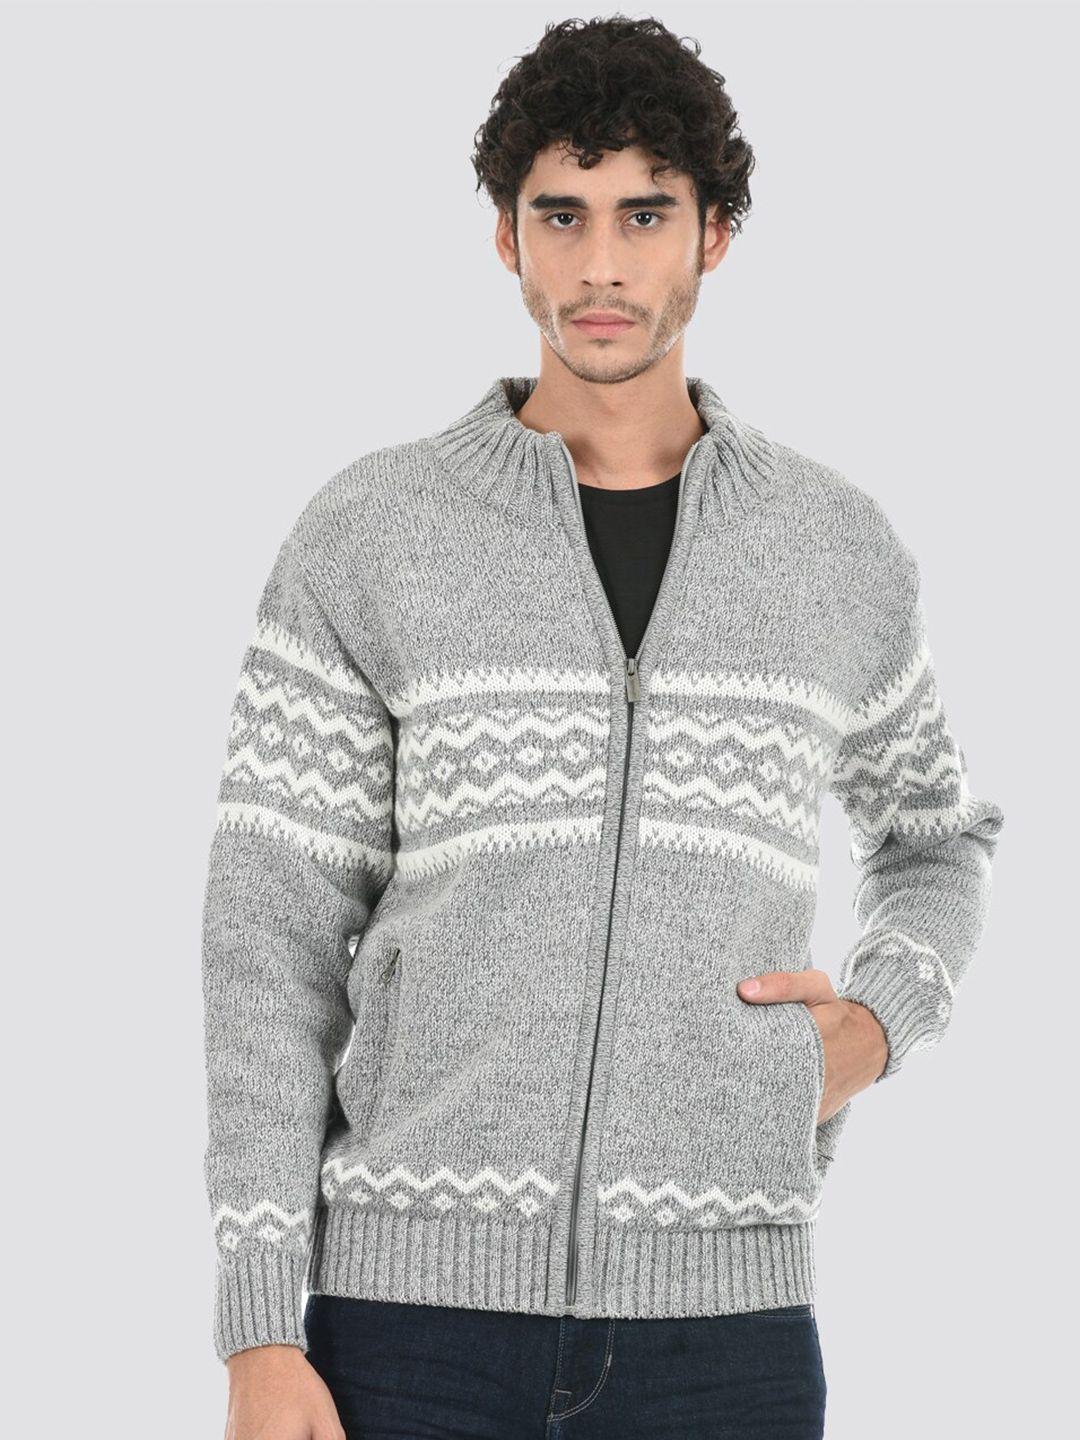 london-fog-geometric-printed-front-open-sweater